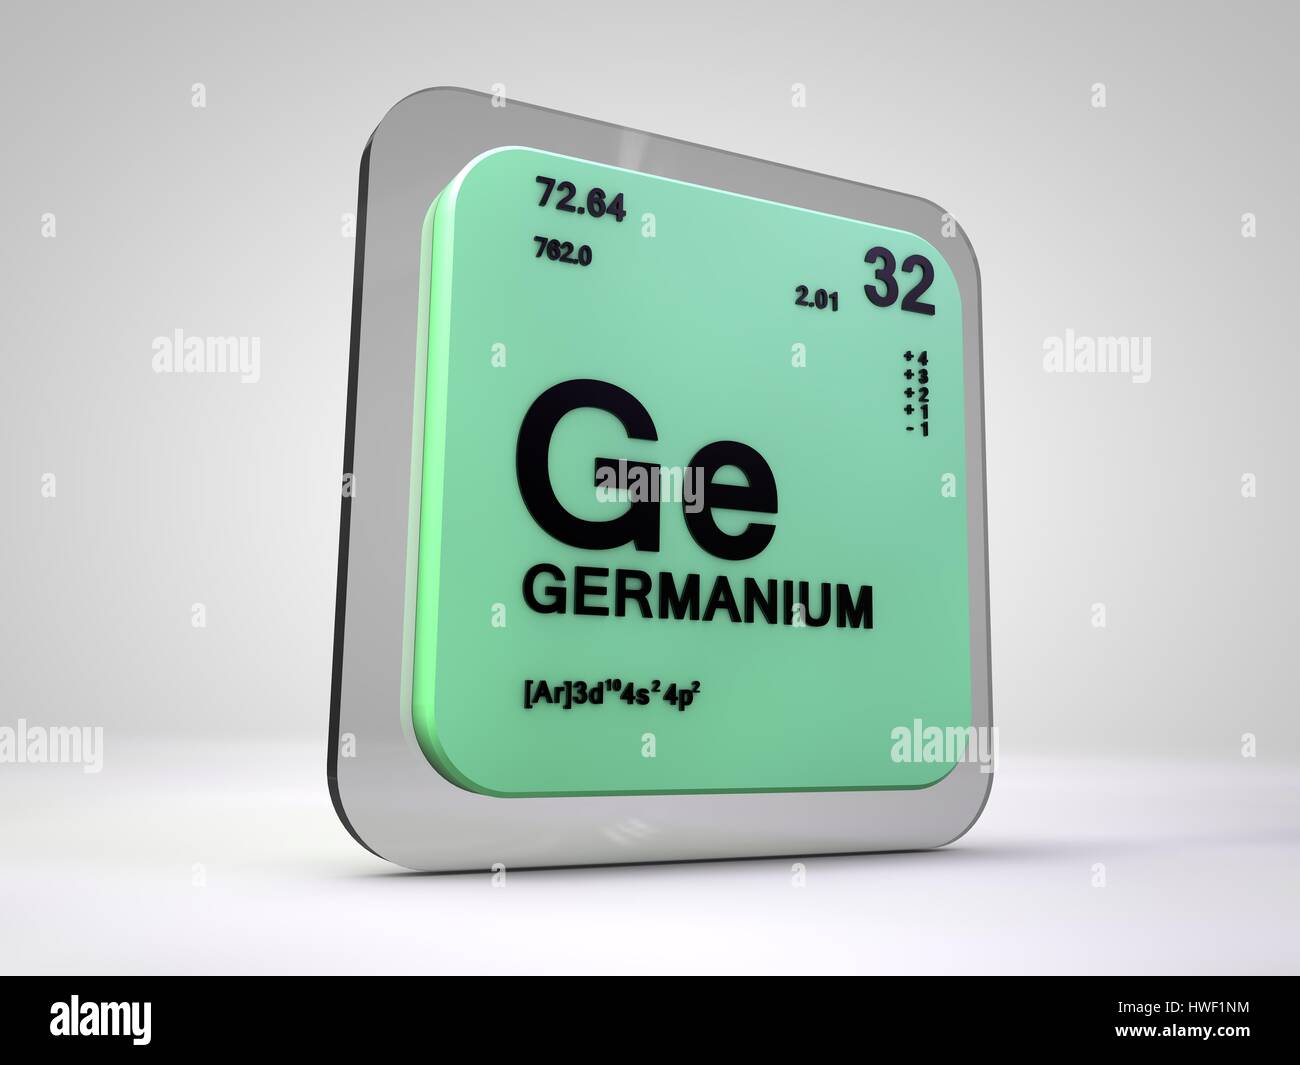 Germanium- Ge - chemical element periodic table 3d render Stock Photo